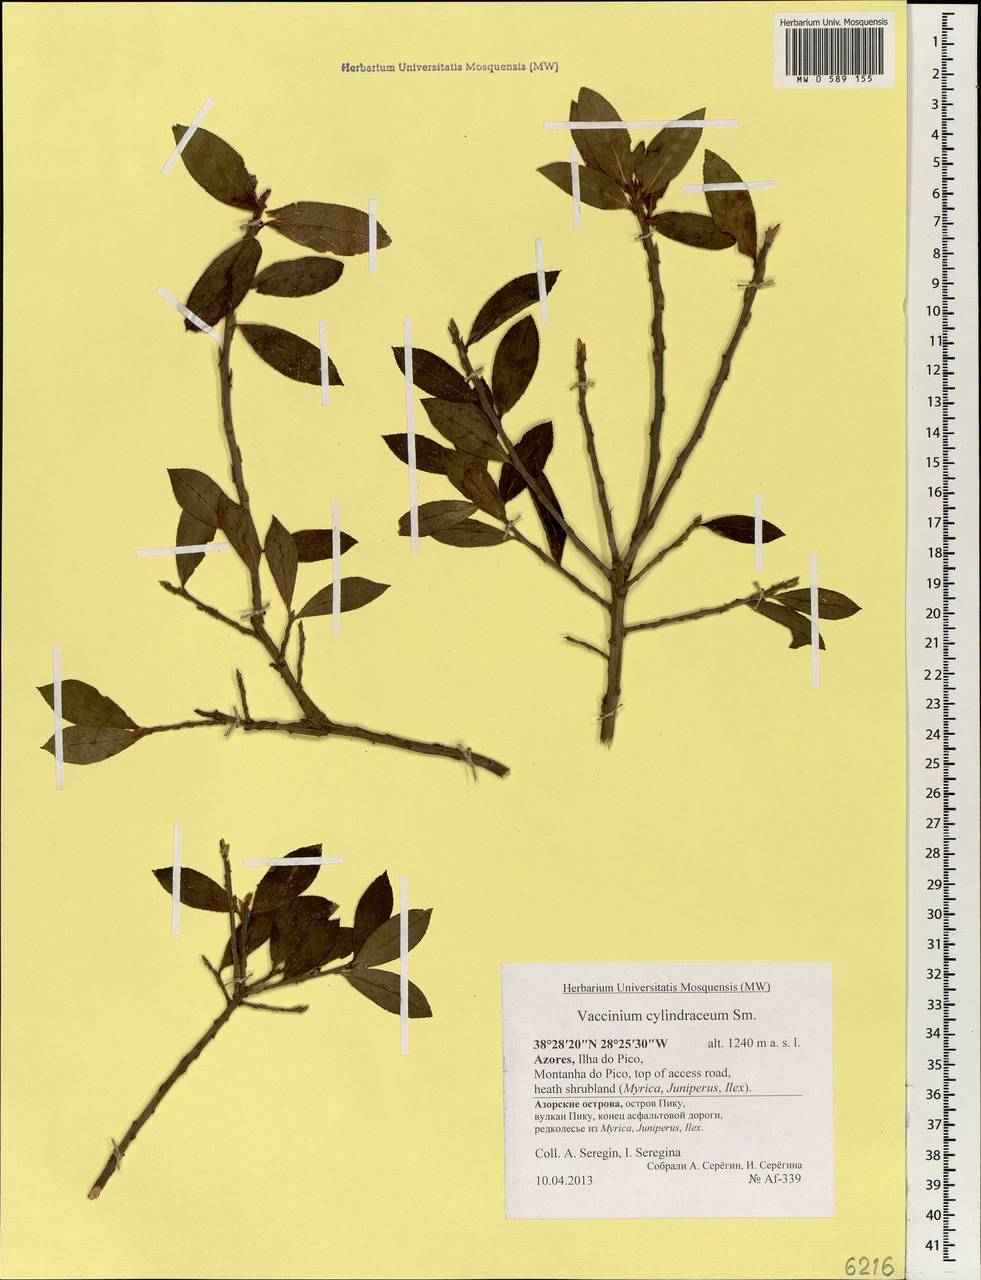 Vaccinium cylindraceum Sm., Africa (AFR) (Portugal)